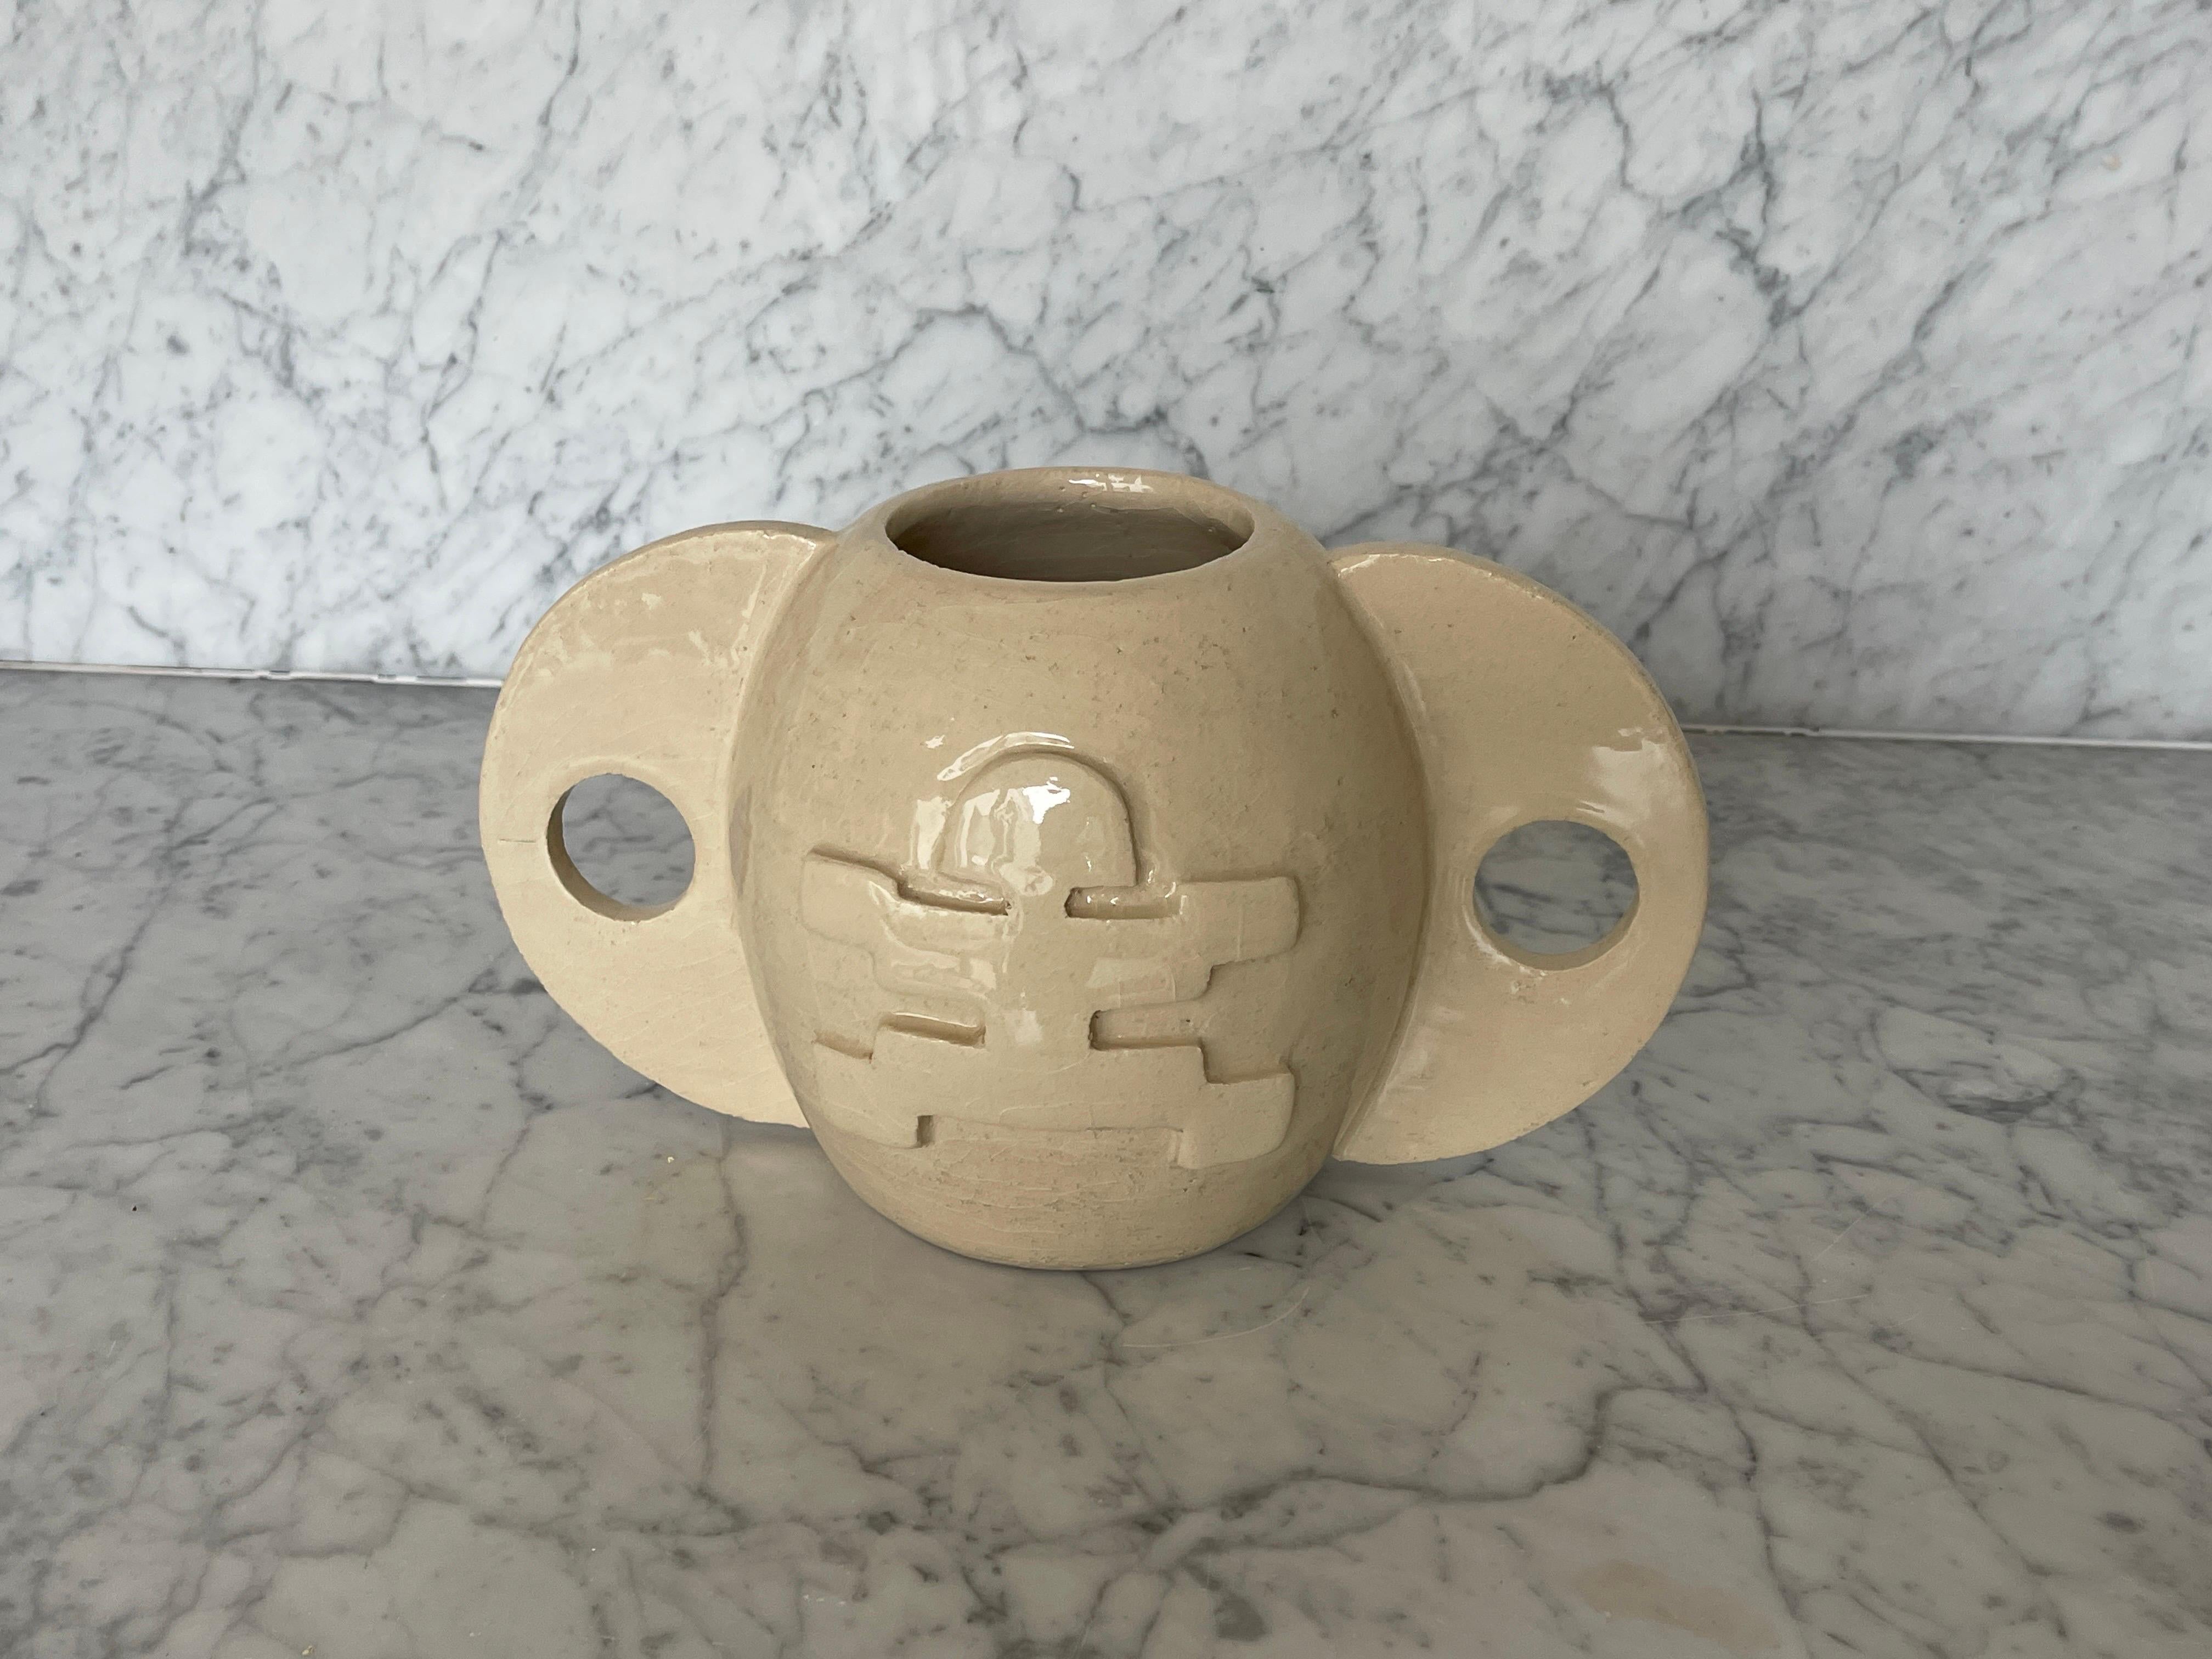 Handmade ceramic vaze by chilean belgian artist Mariela Ceramica